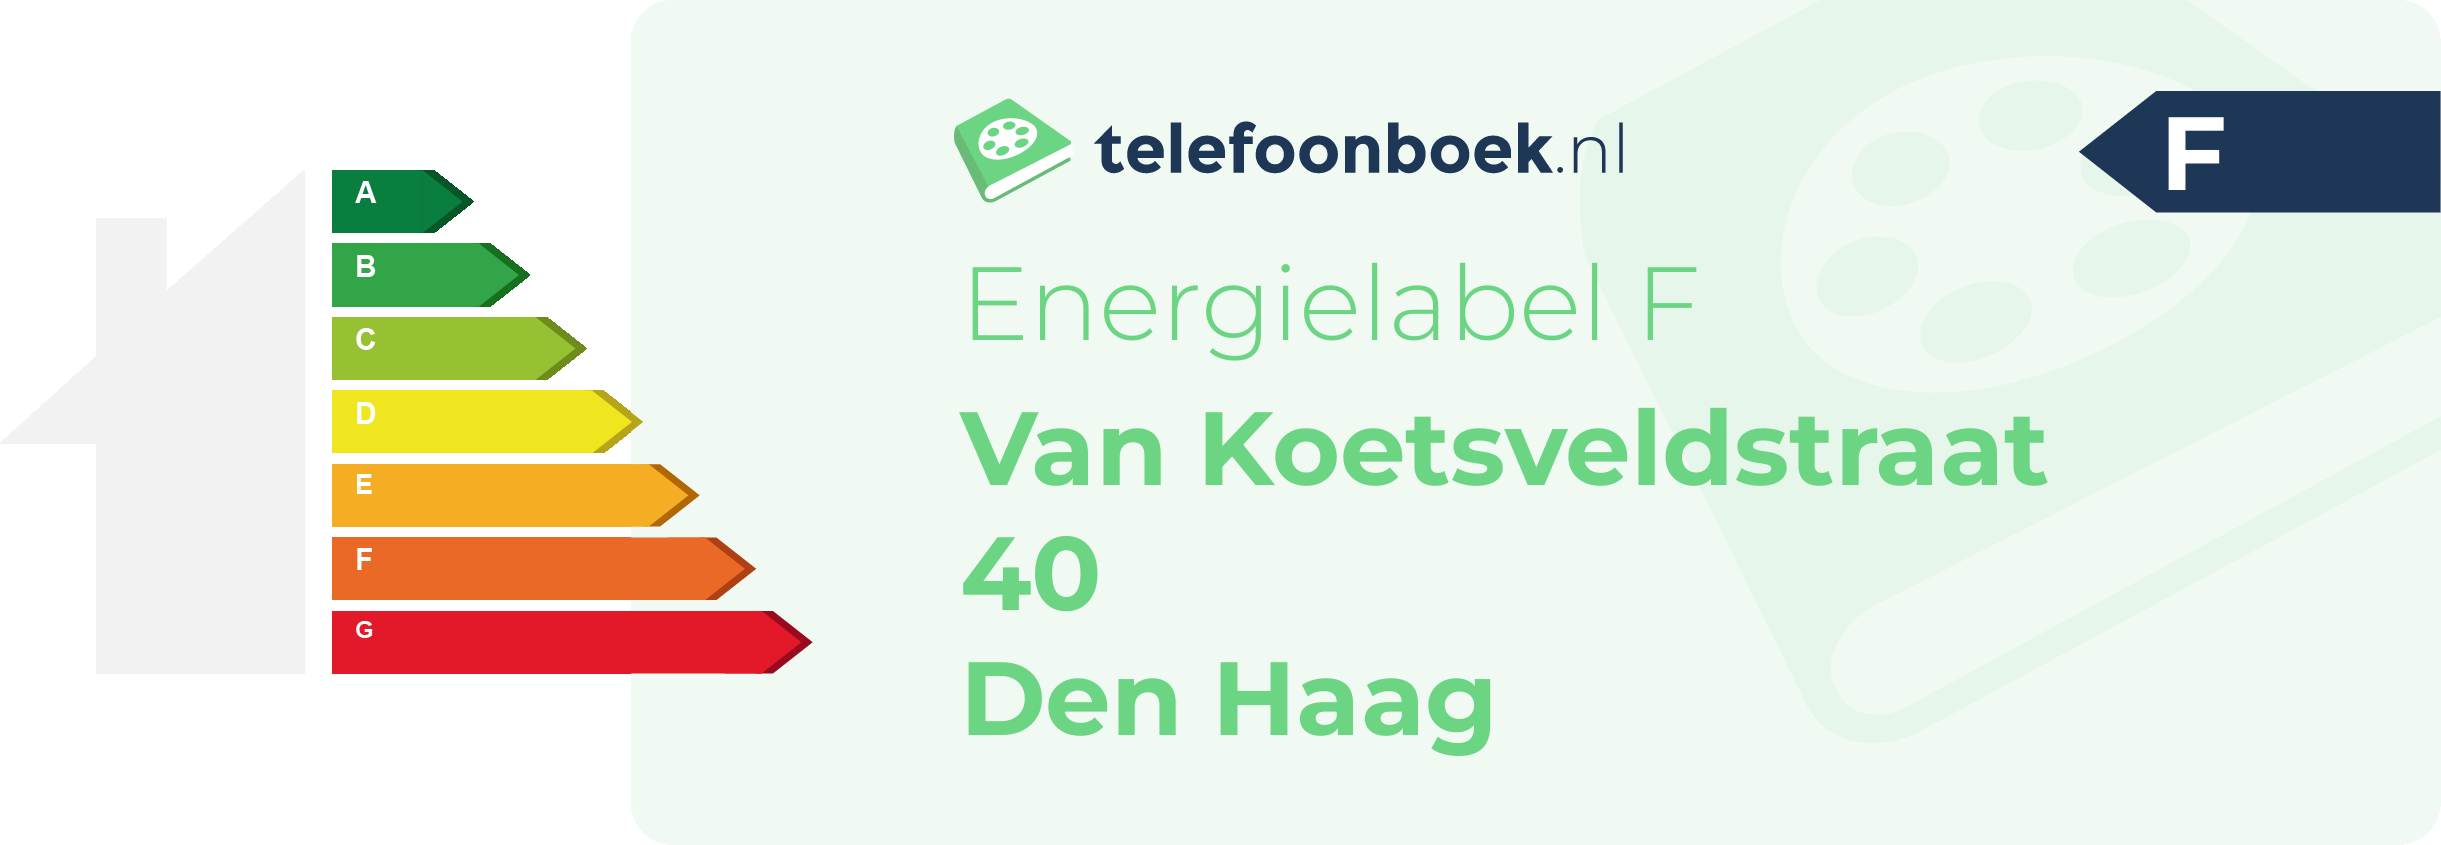 Energielabel Van Koetsveldstraat 40 Den Haag